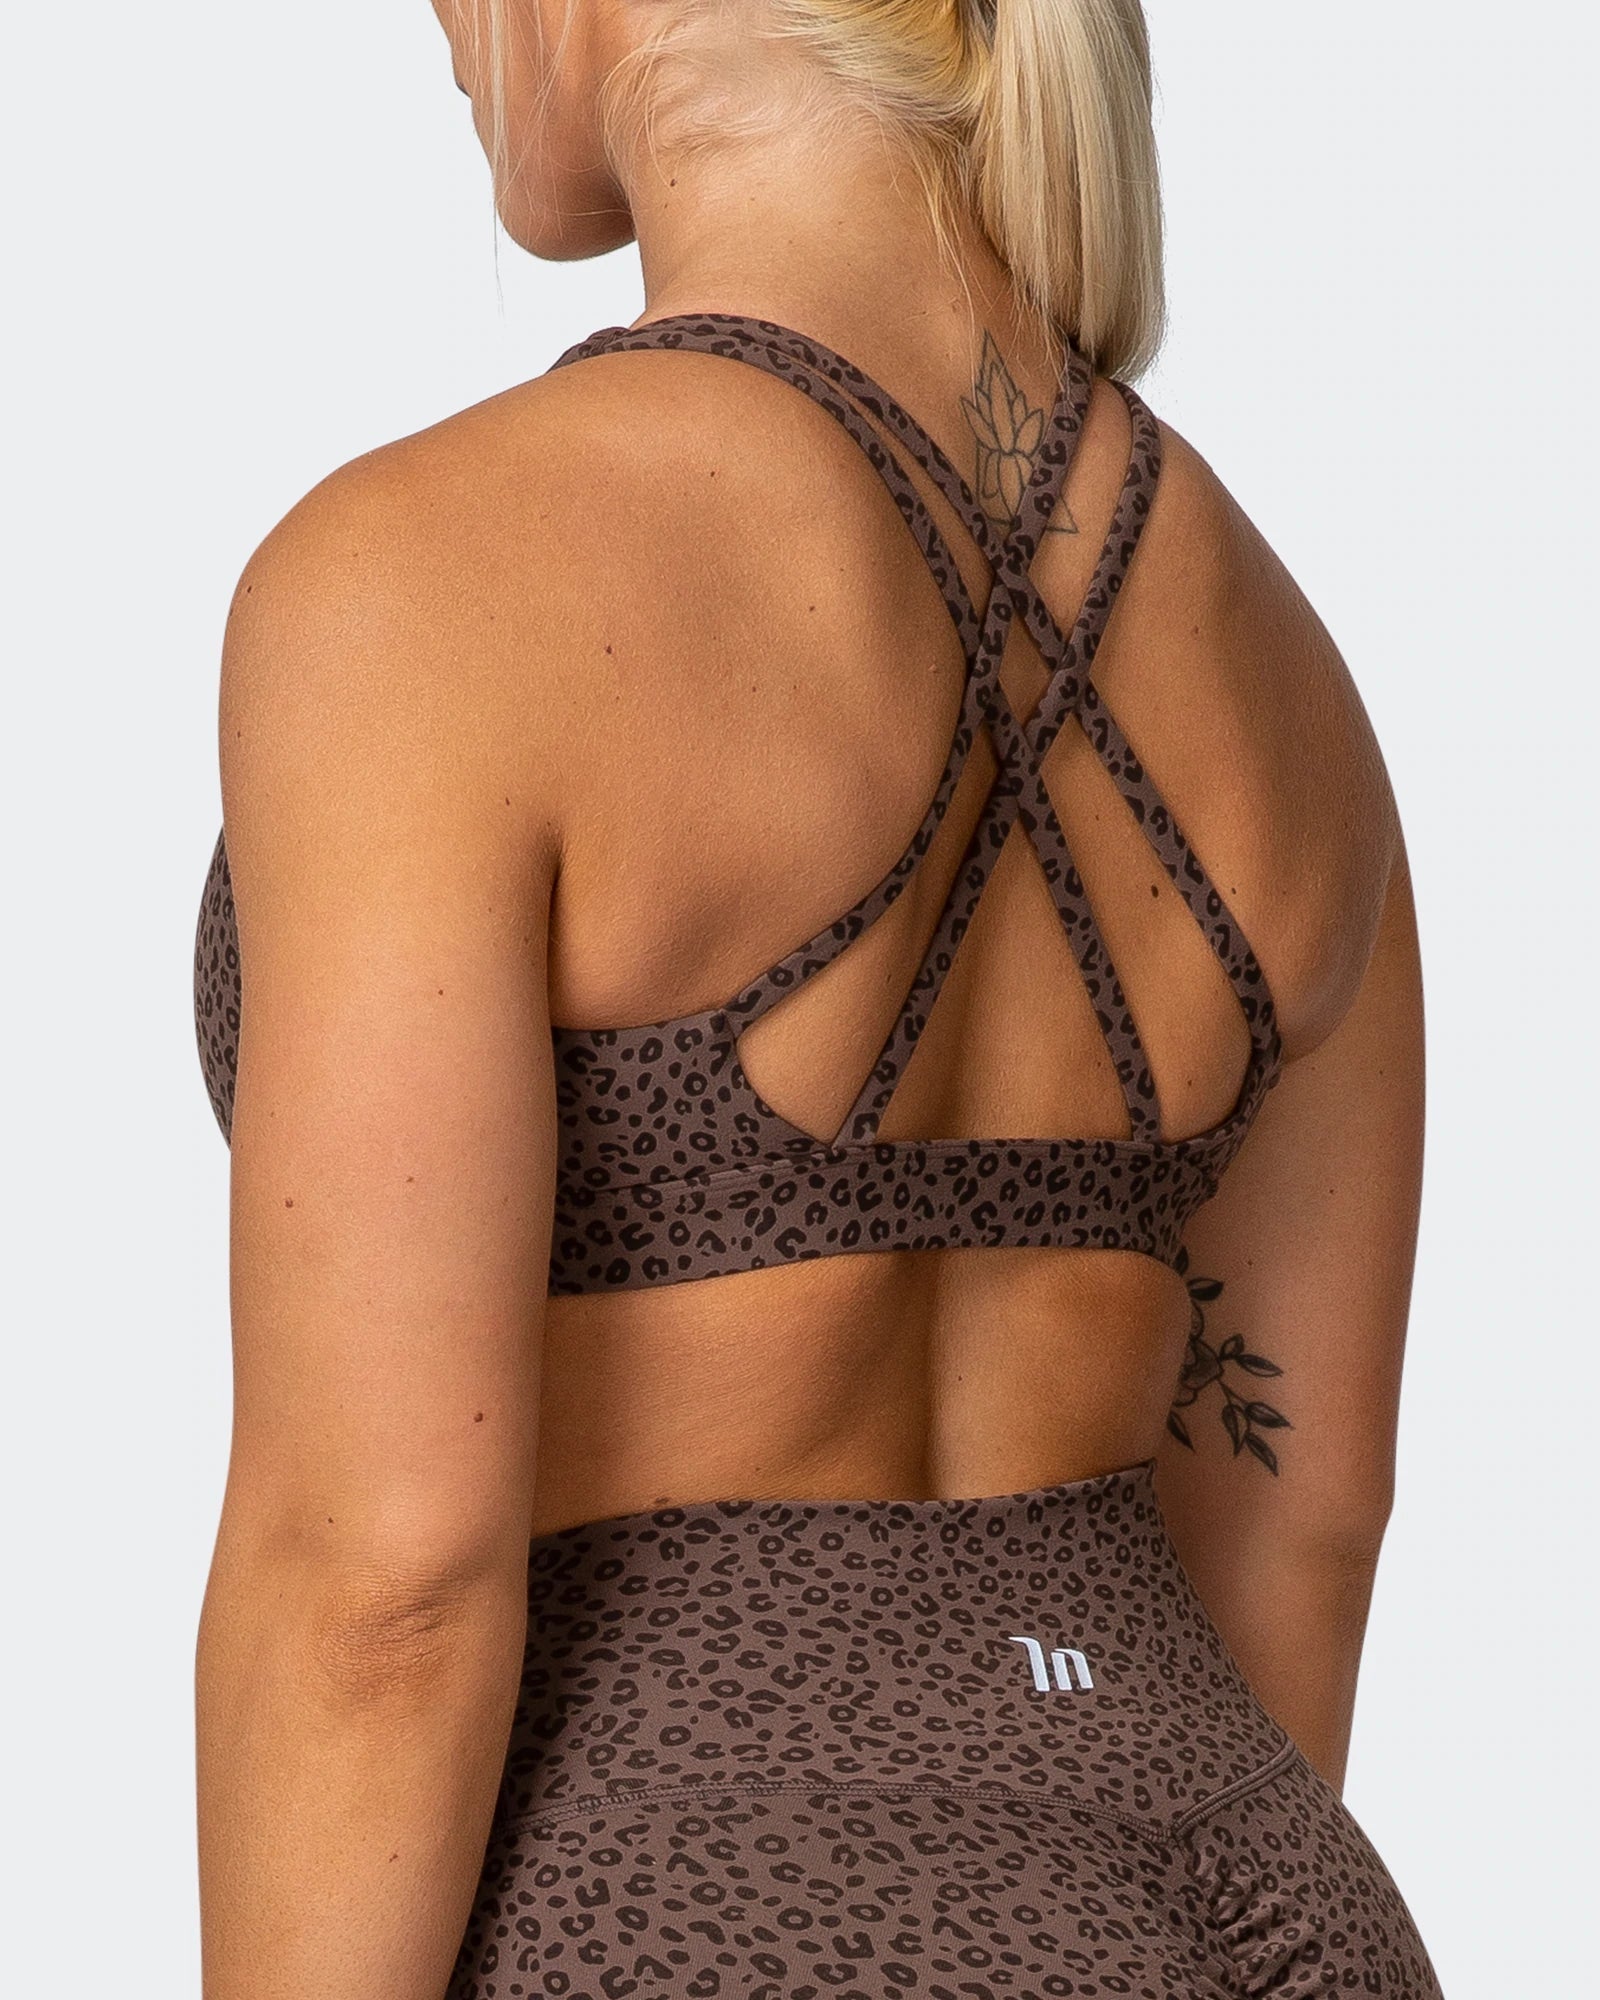 musclenation crop Top, sports bra ALL-STAR DEEP V BRA Chocolate Mini Cheetah Print